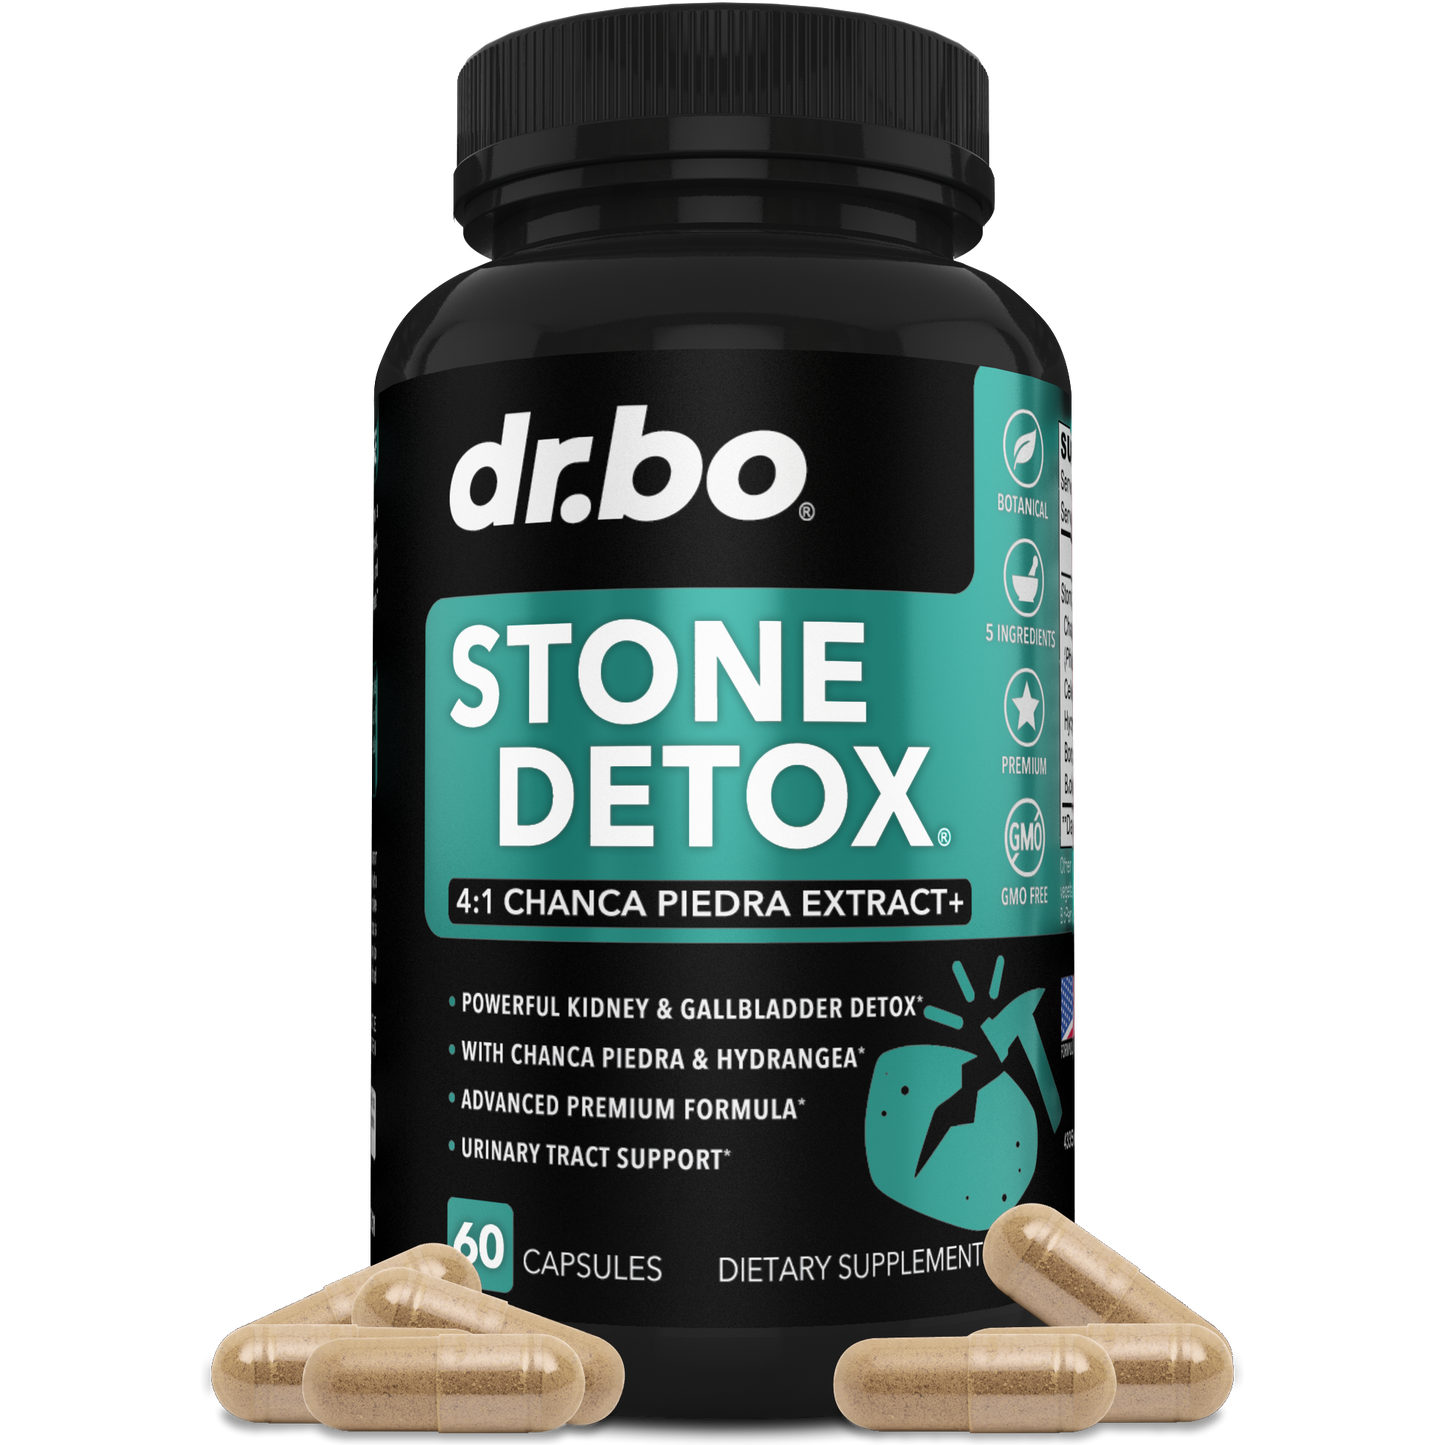 Stone Detox